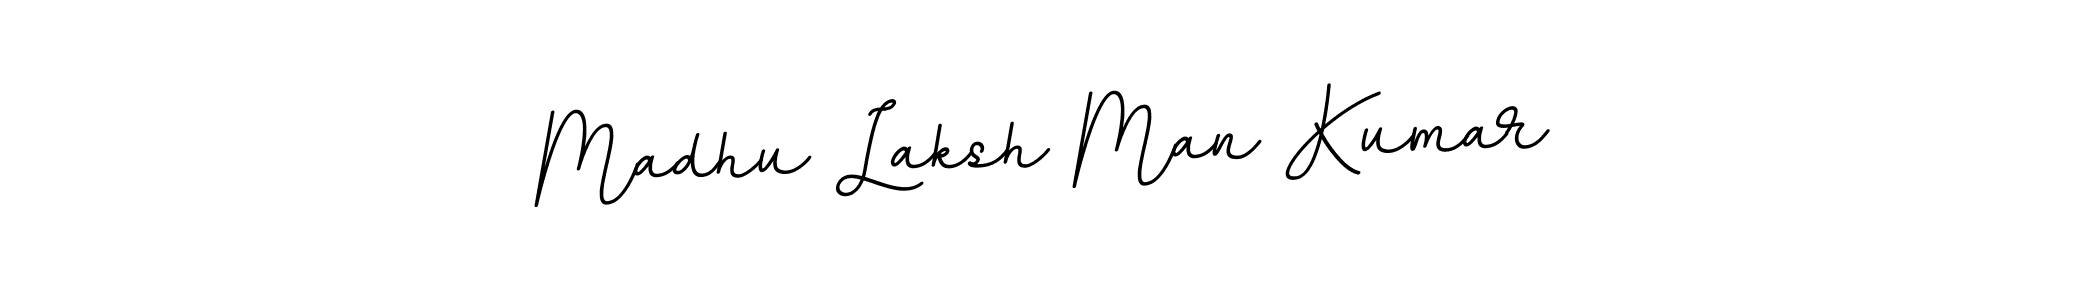 How to Draw Madhu Laksh Man Kumar signature style? BallpointsItalic-DORy9 is a latest design signature styles for name Madhu Laksh Man Kumar. Madhu Laksh Man Kumar signature style 11 images and pictures png